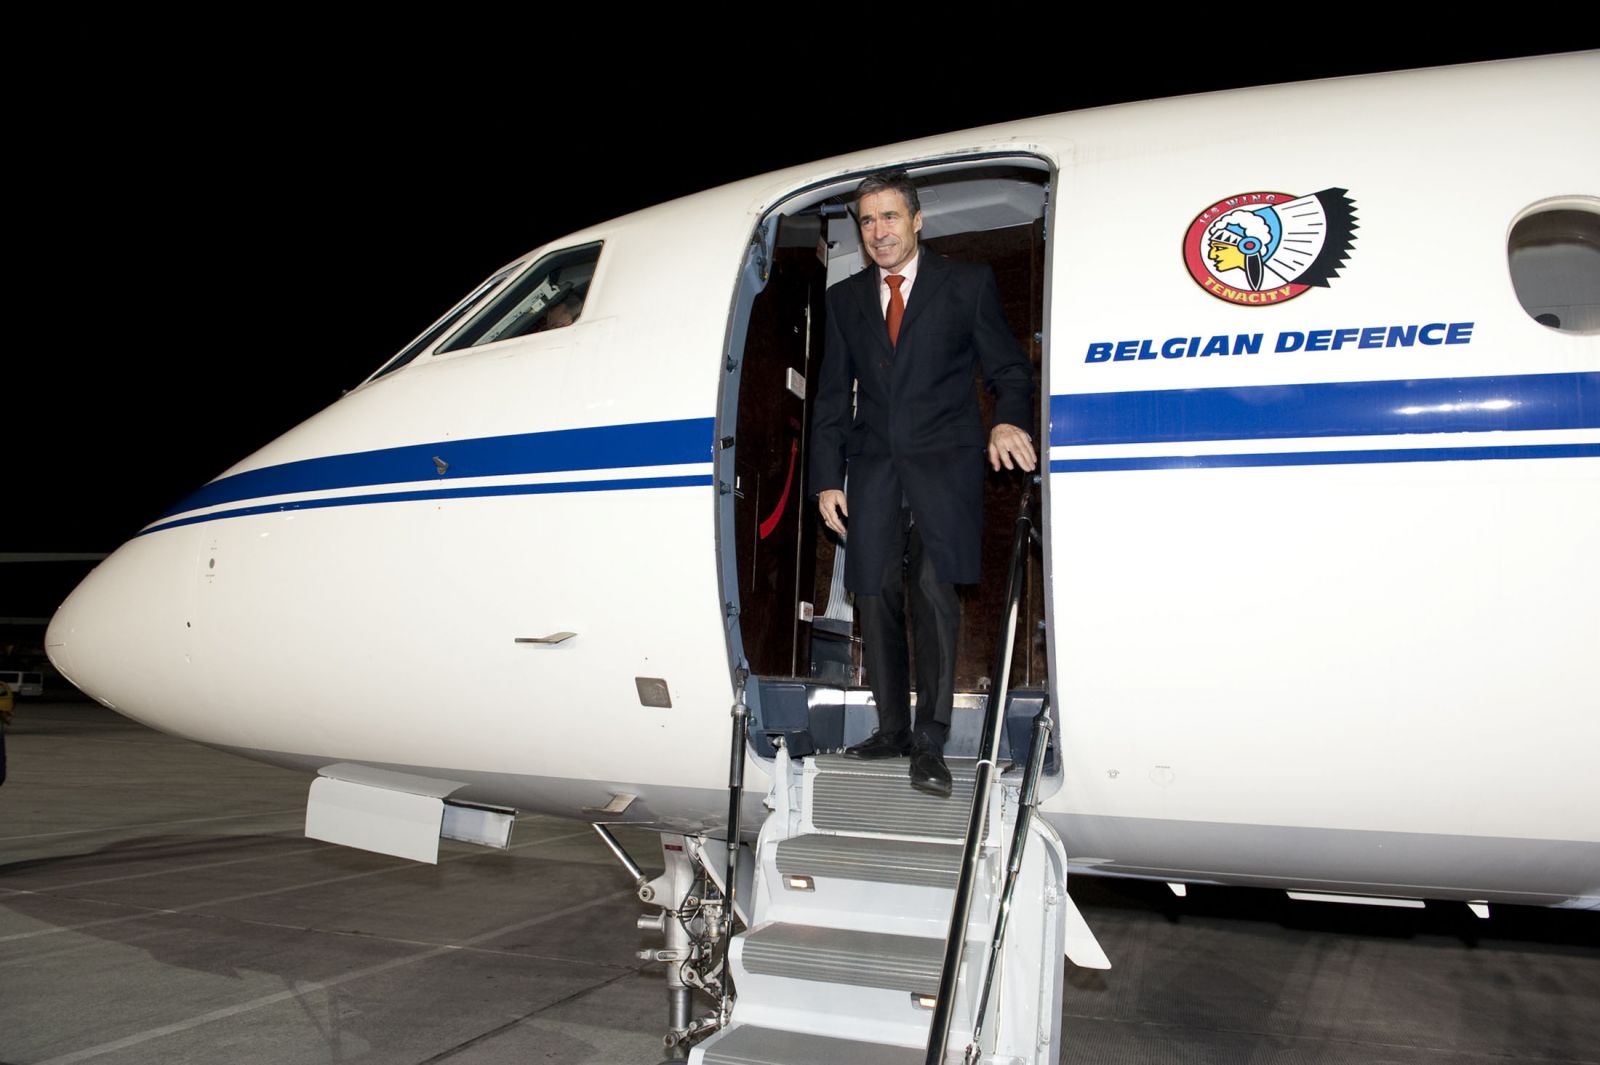 Arrival of NATO Secretary General, Anders Fogh Rasmussen